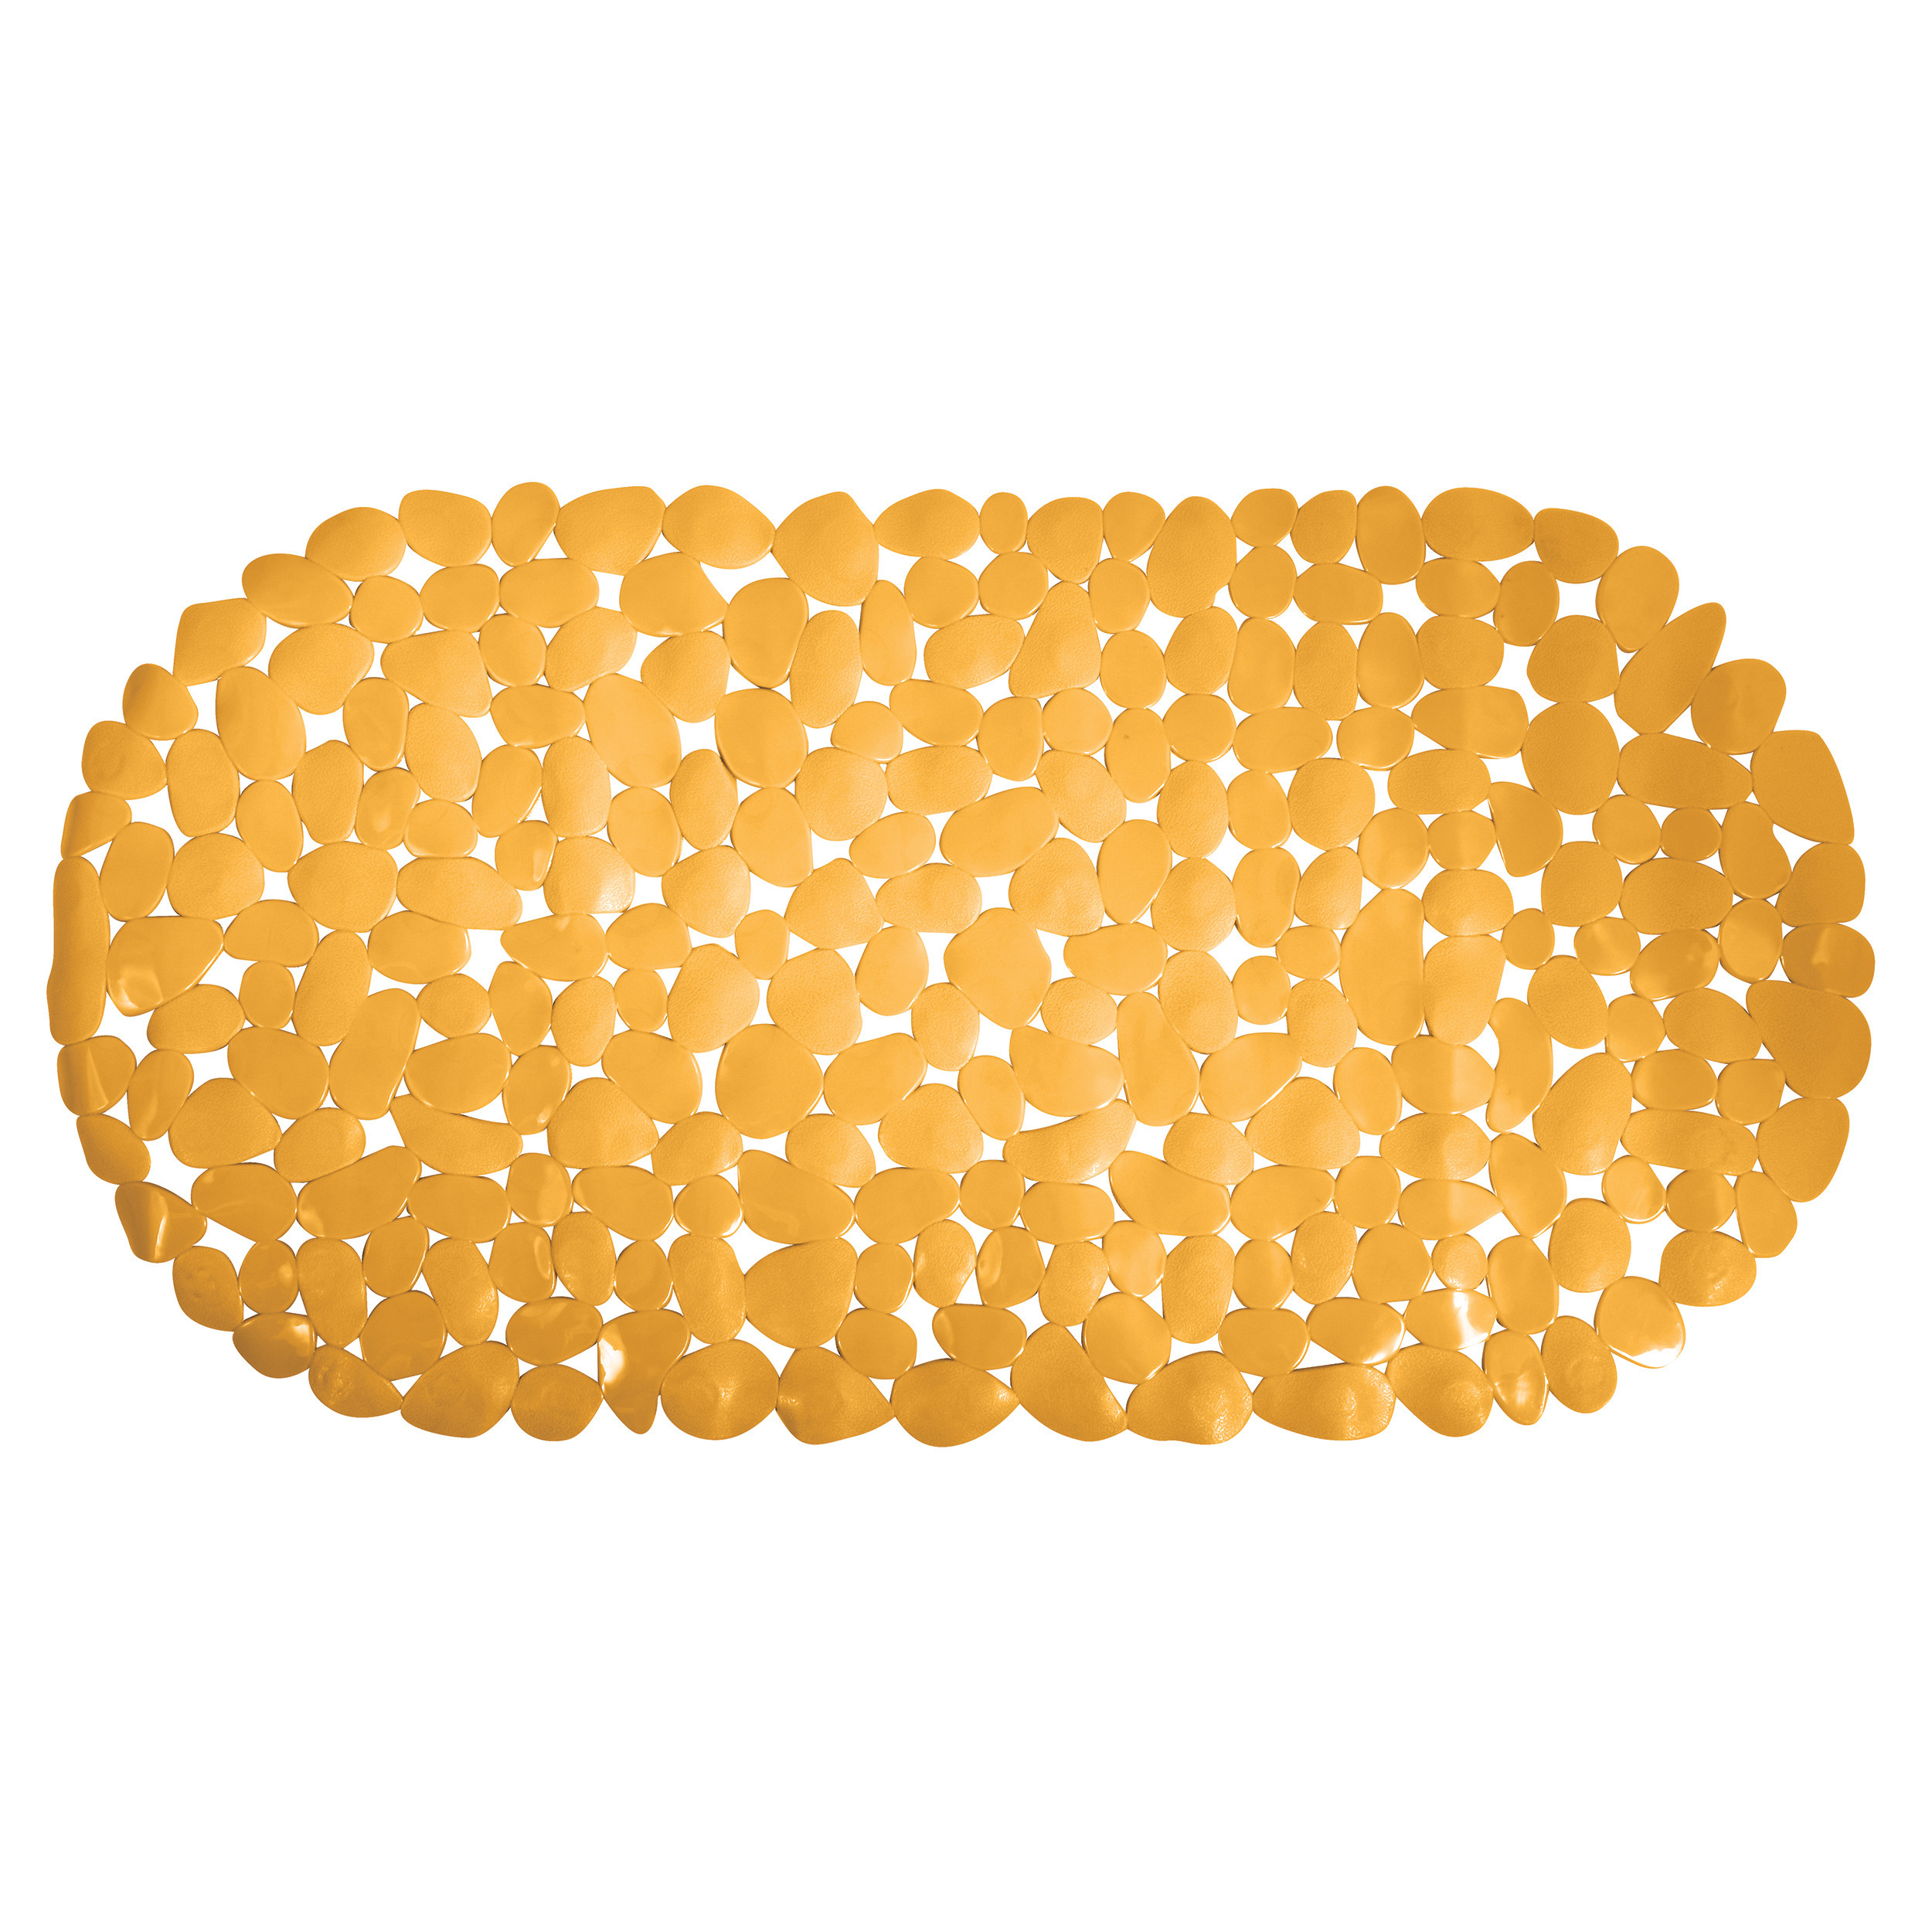 Douche-bad anti-slip mat badkamer pvc saffraan geel 39 x 99 cm ovaal